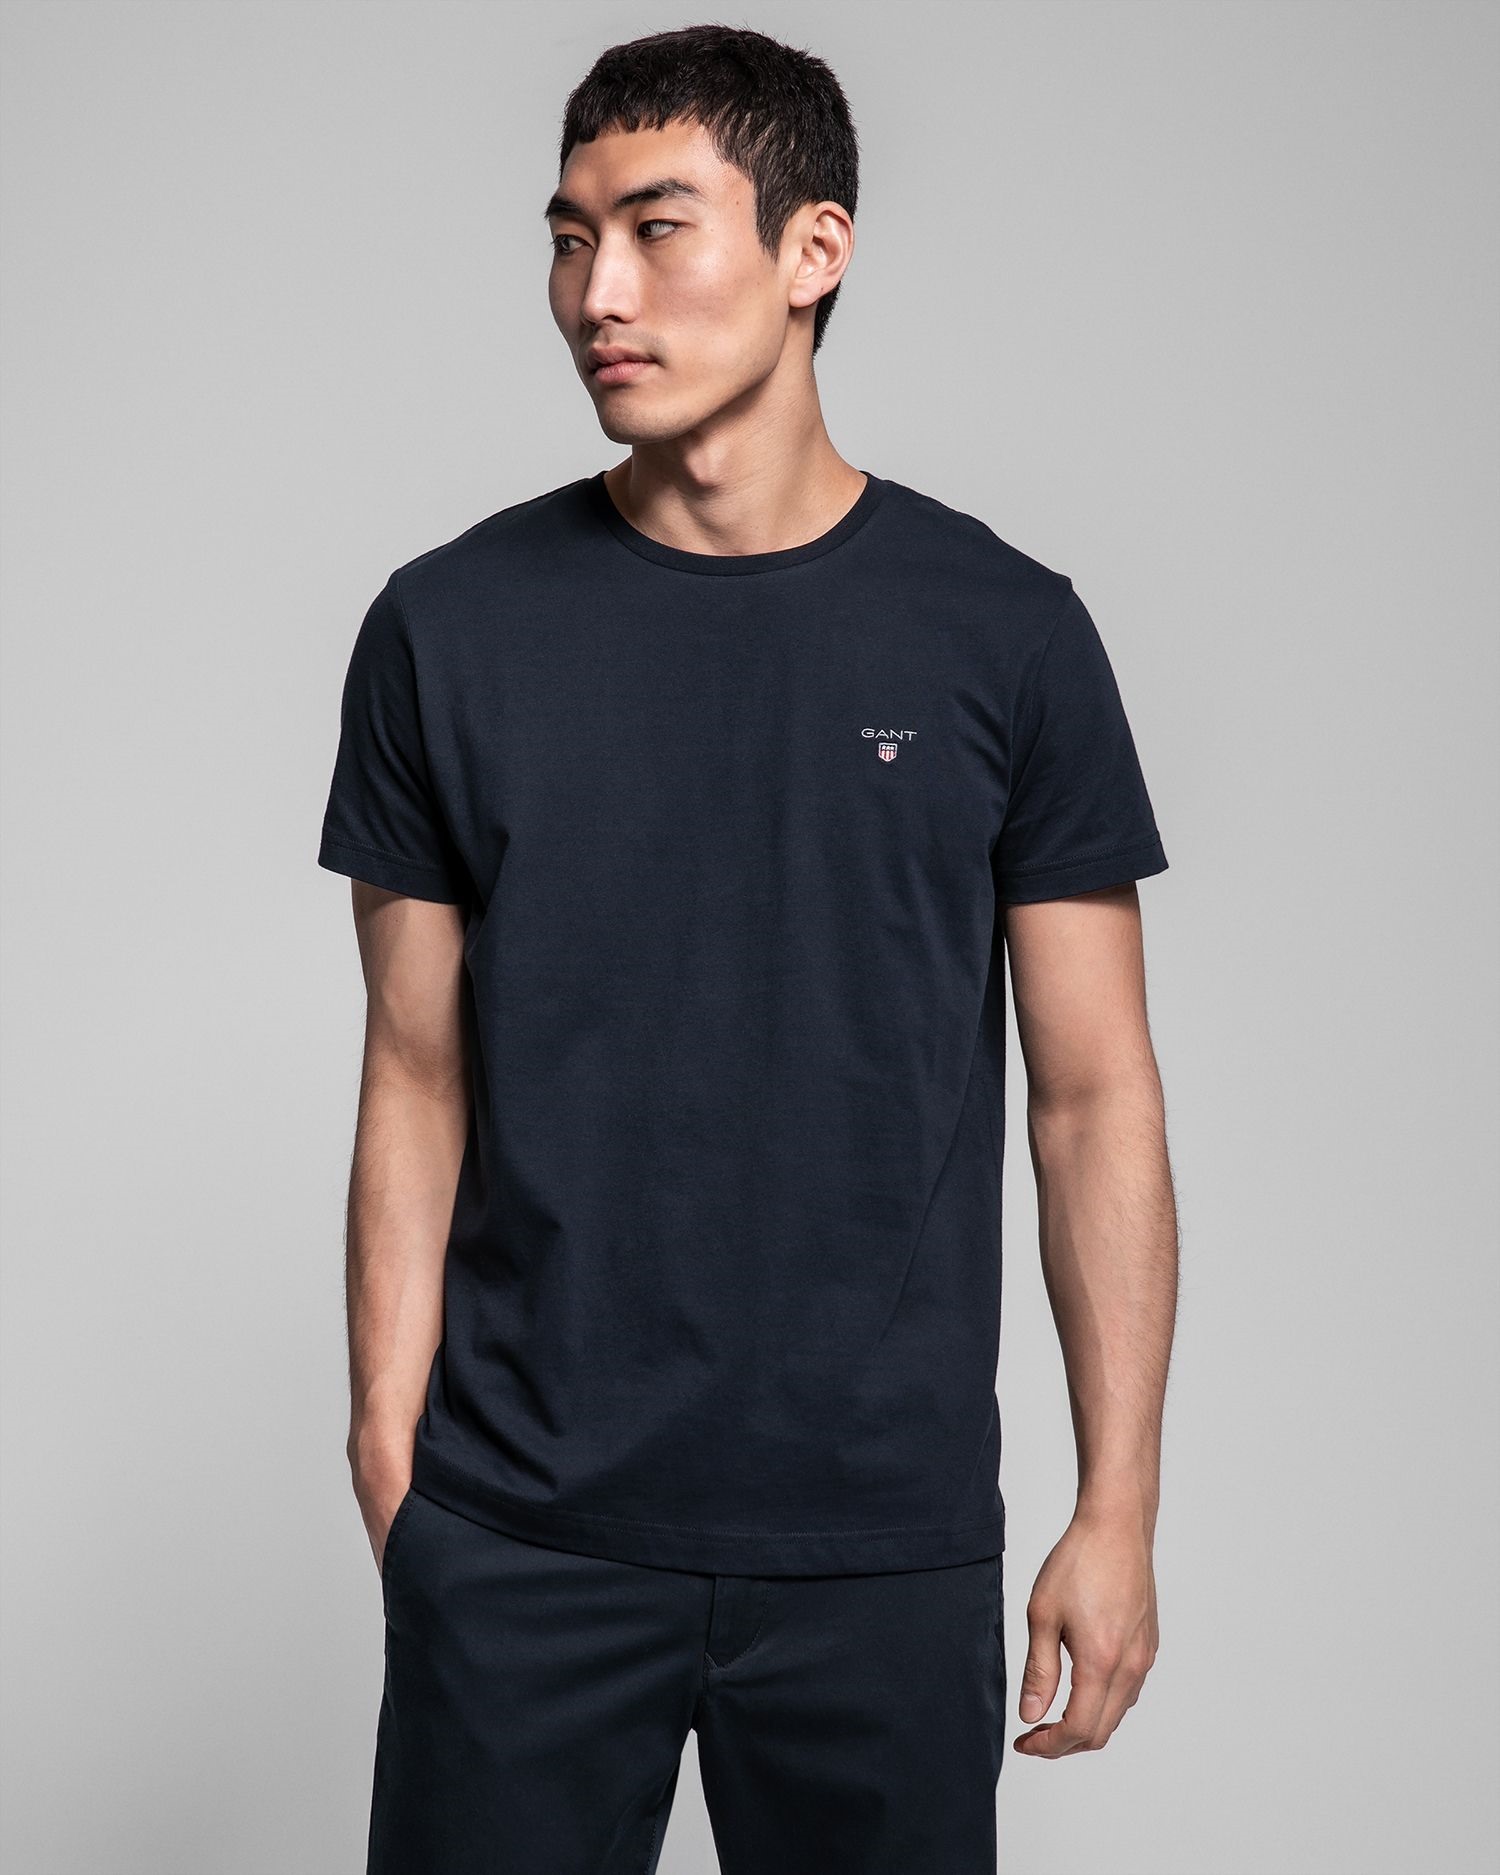 Gant Men's Original T-Shirt Black | Port Phillip Shop